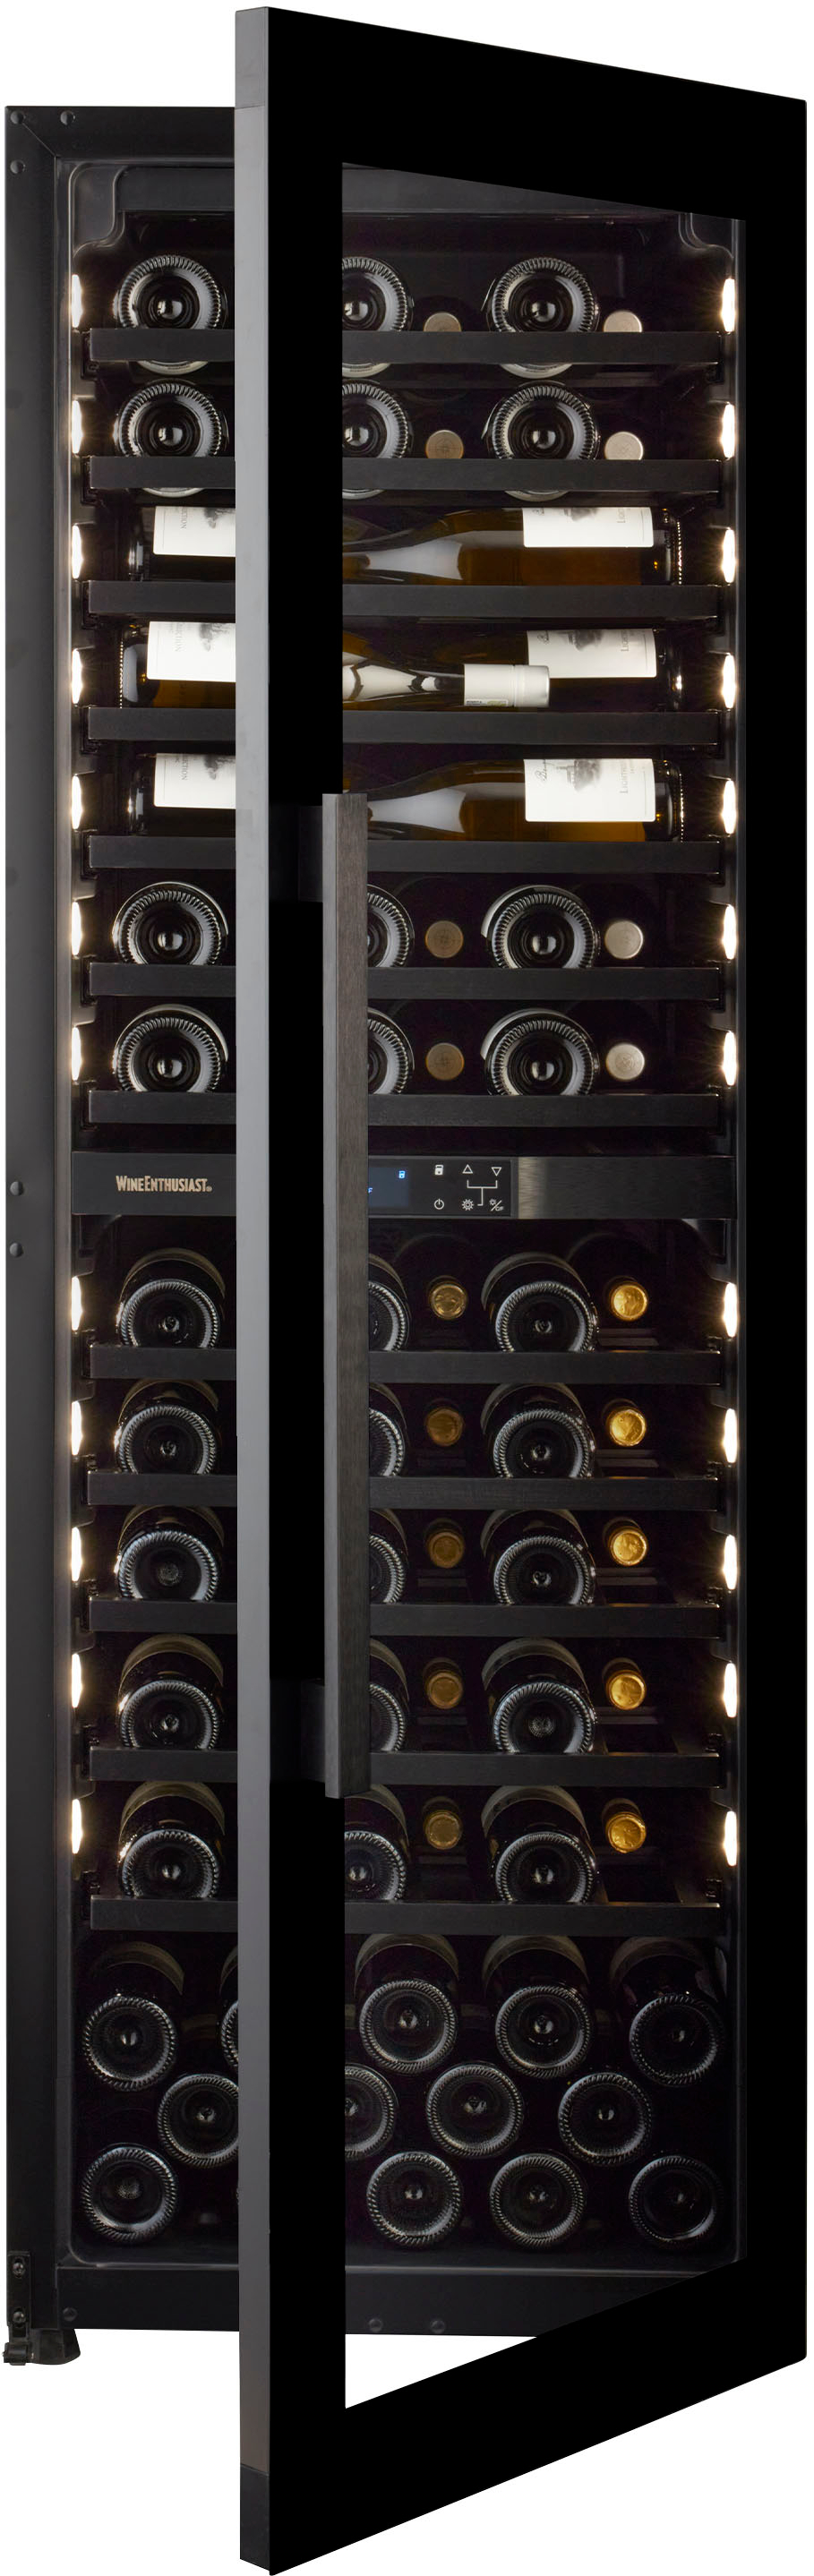 Avintage Built-in Wine Cellar AVU25SXMO 30 x 82 Cm Stainless Steel/Black:  buy online on MK2Shop